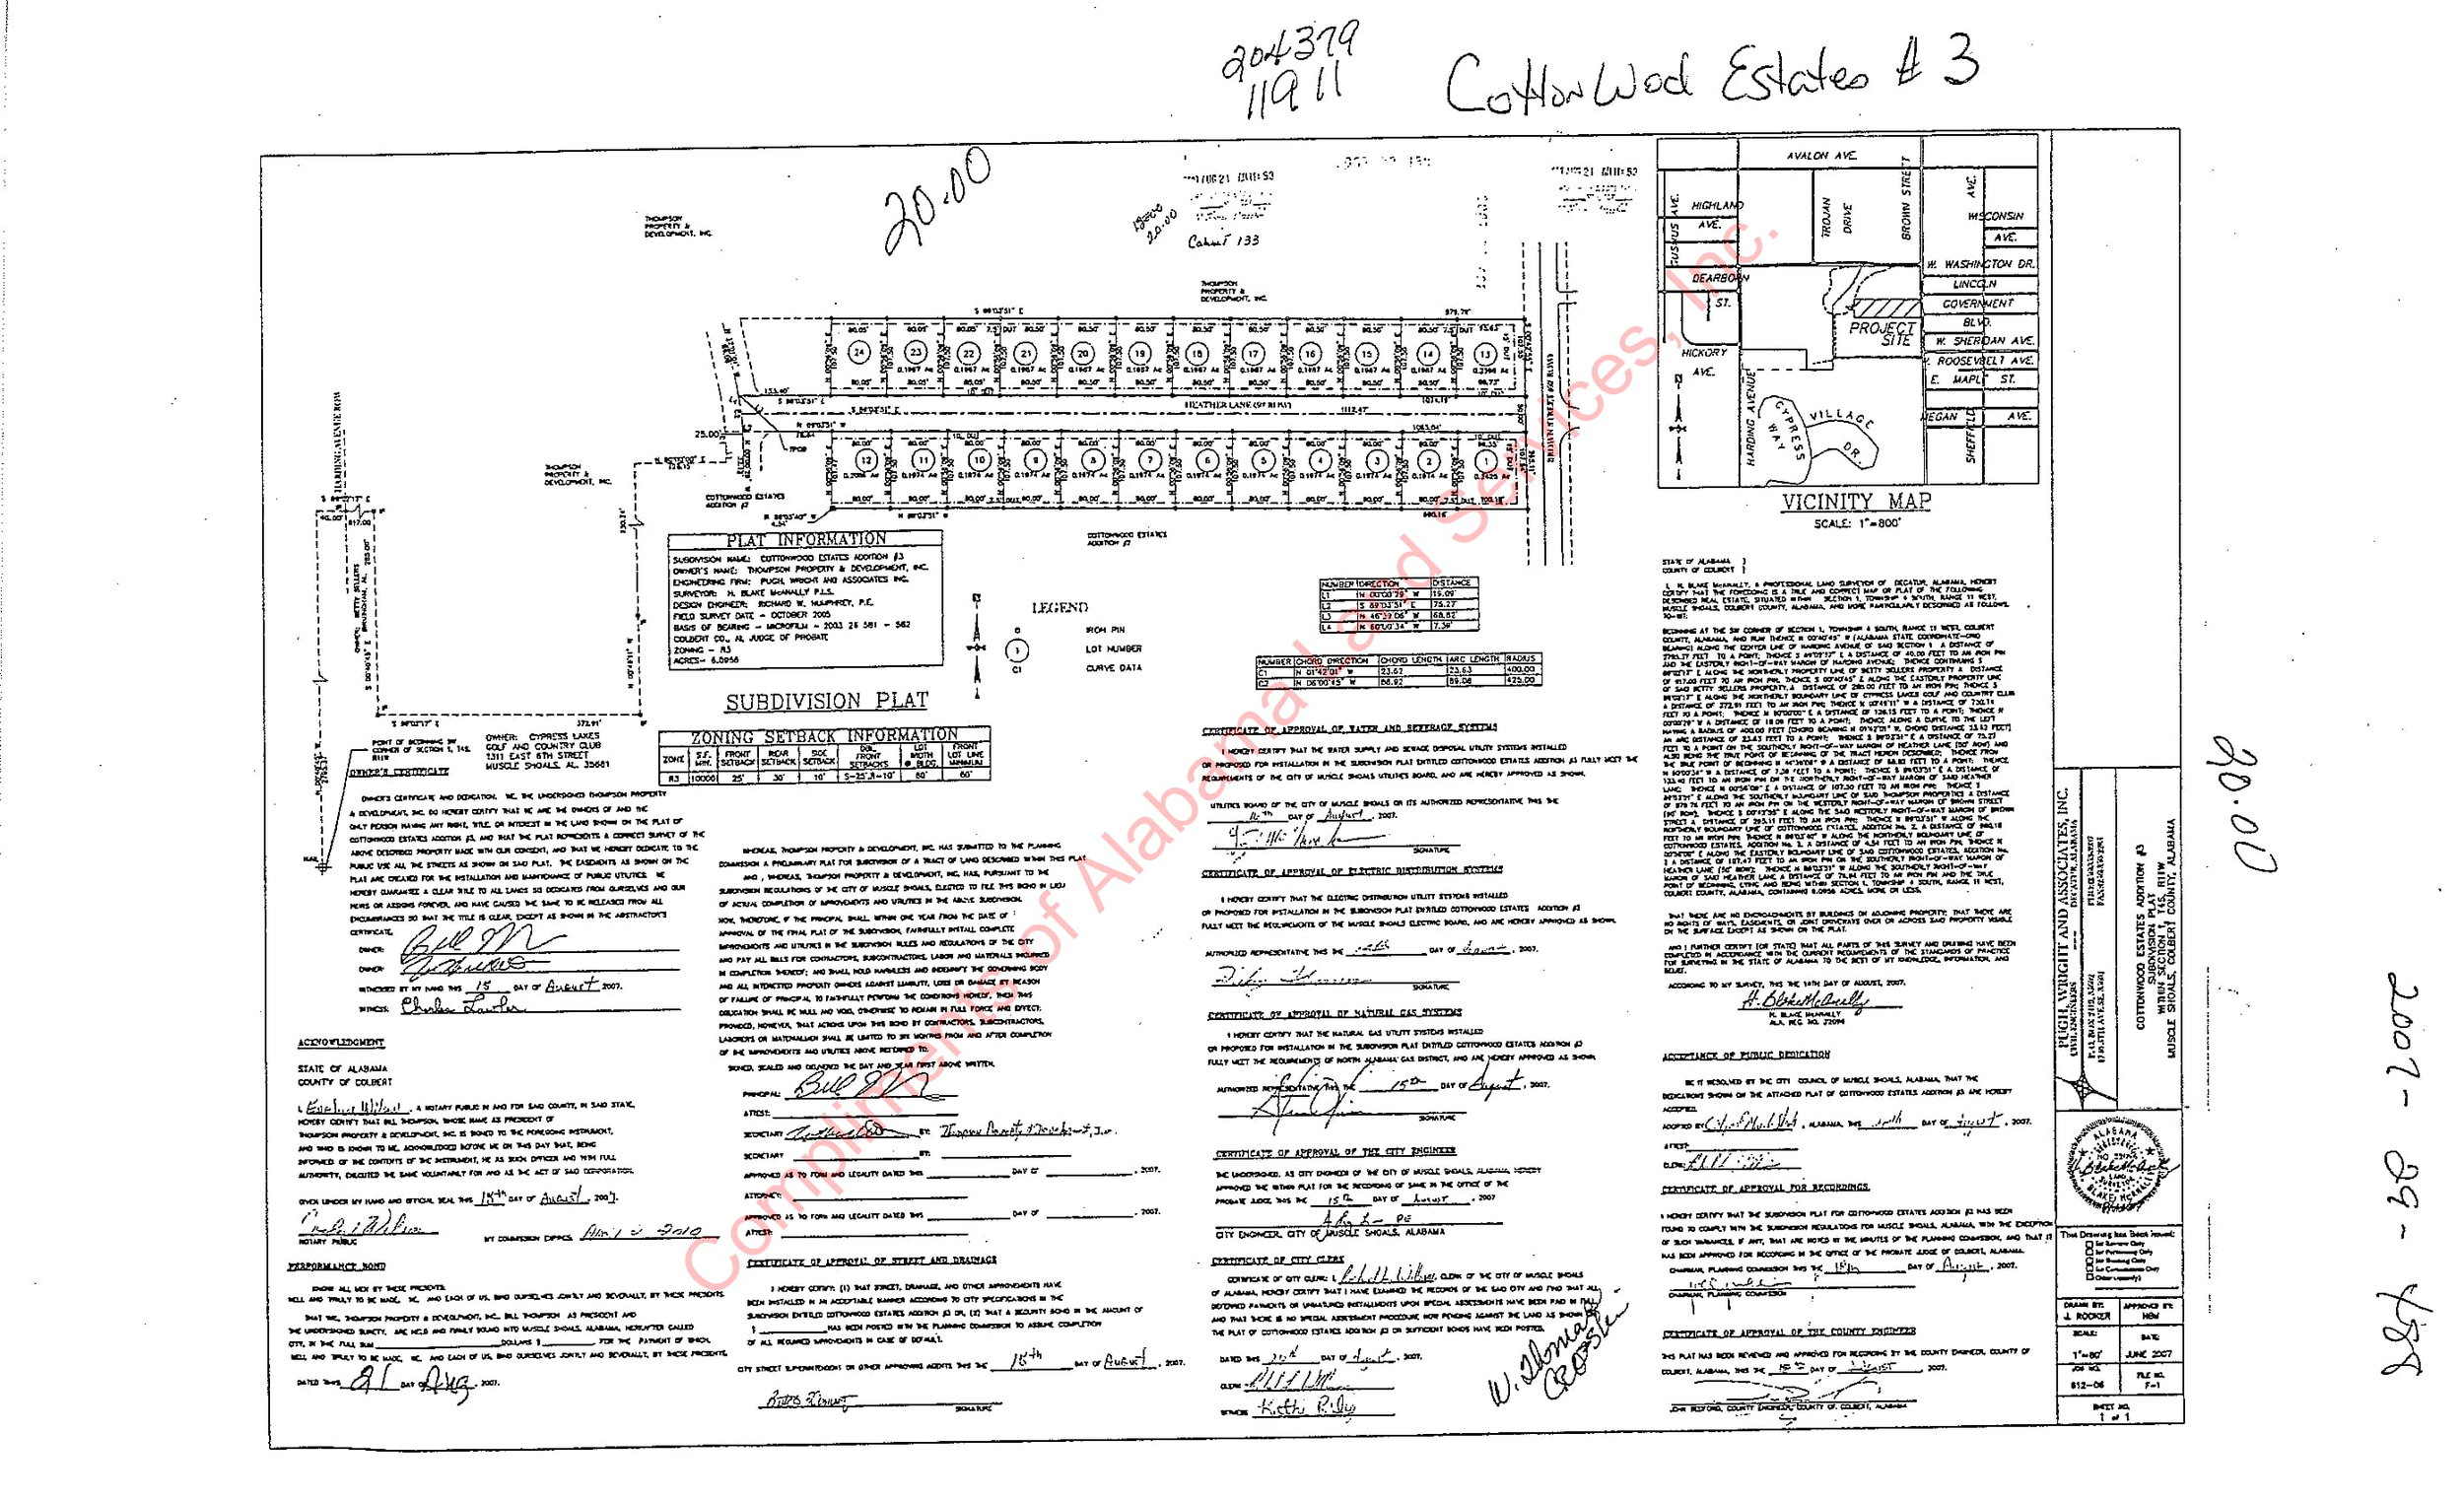 Cottonwood Estates III plat-1.jpg